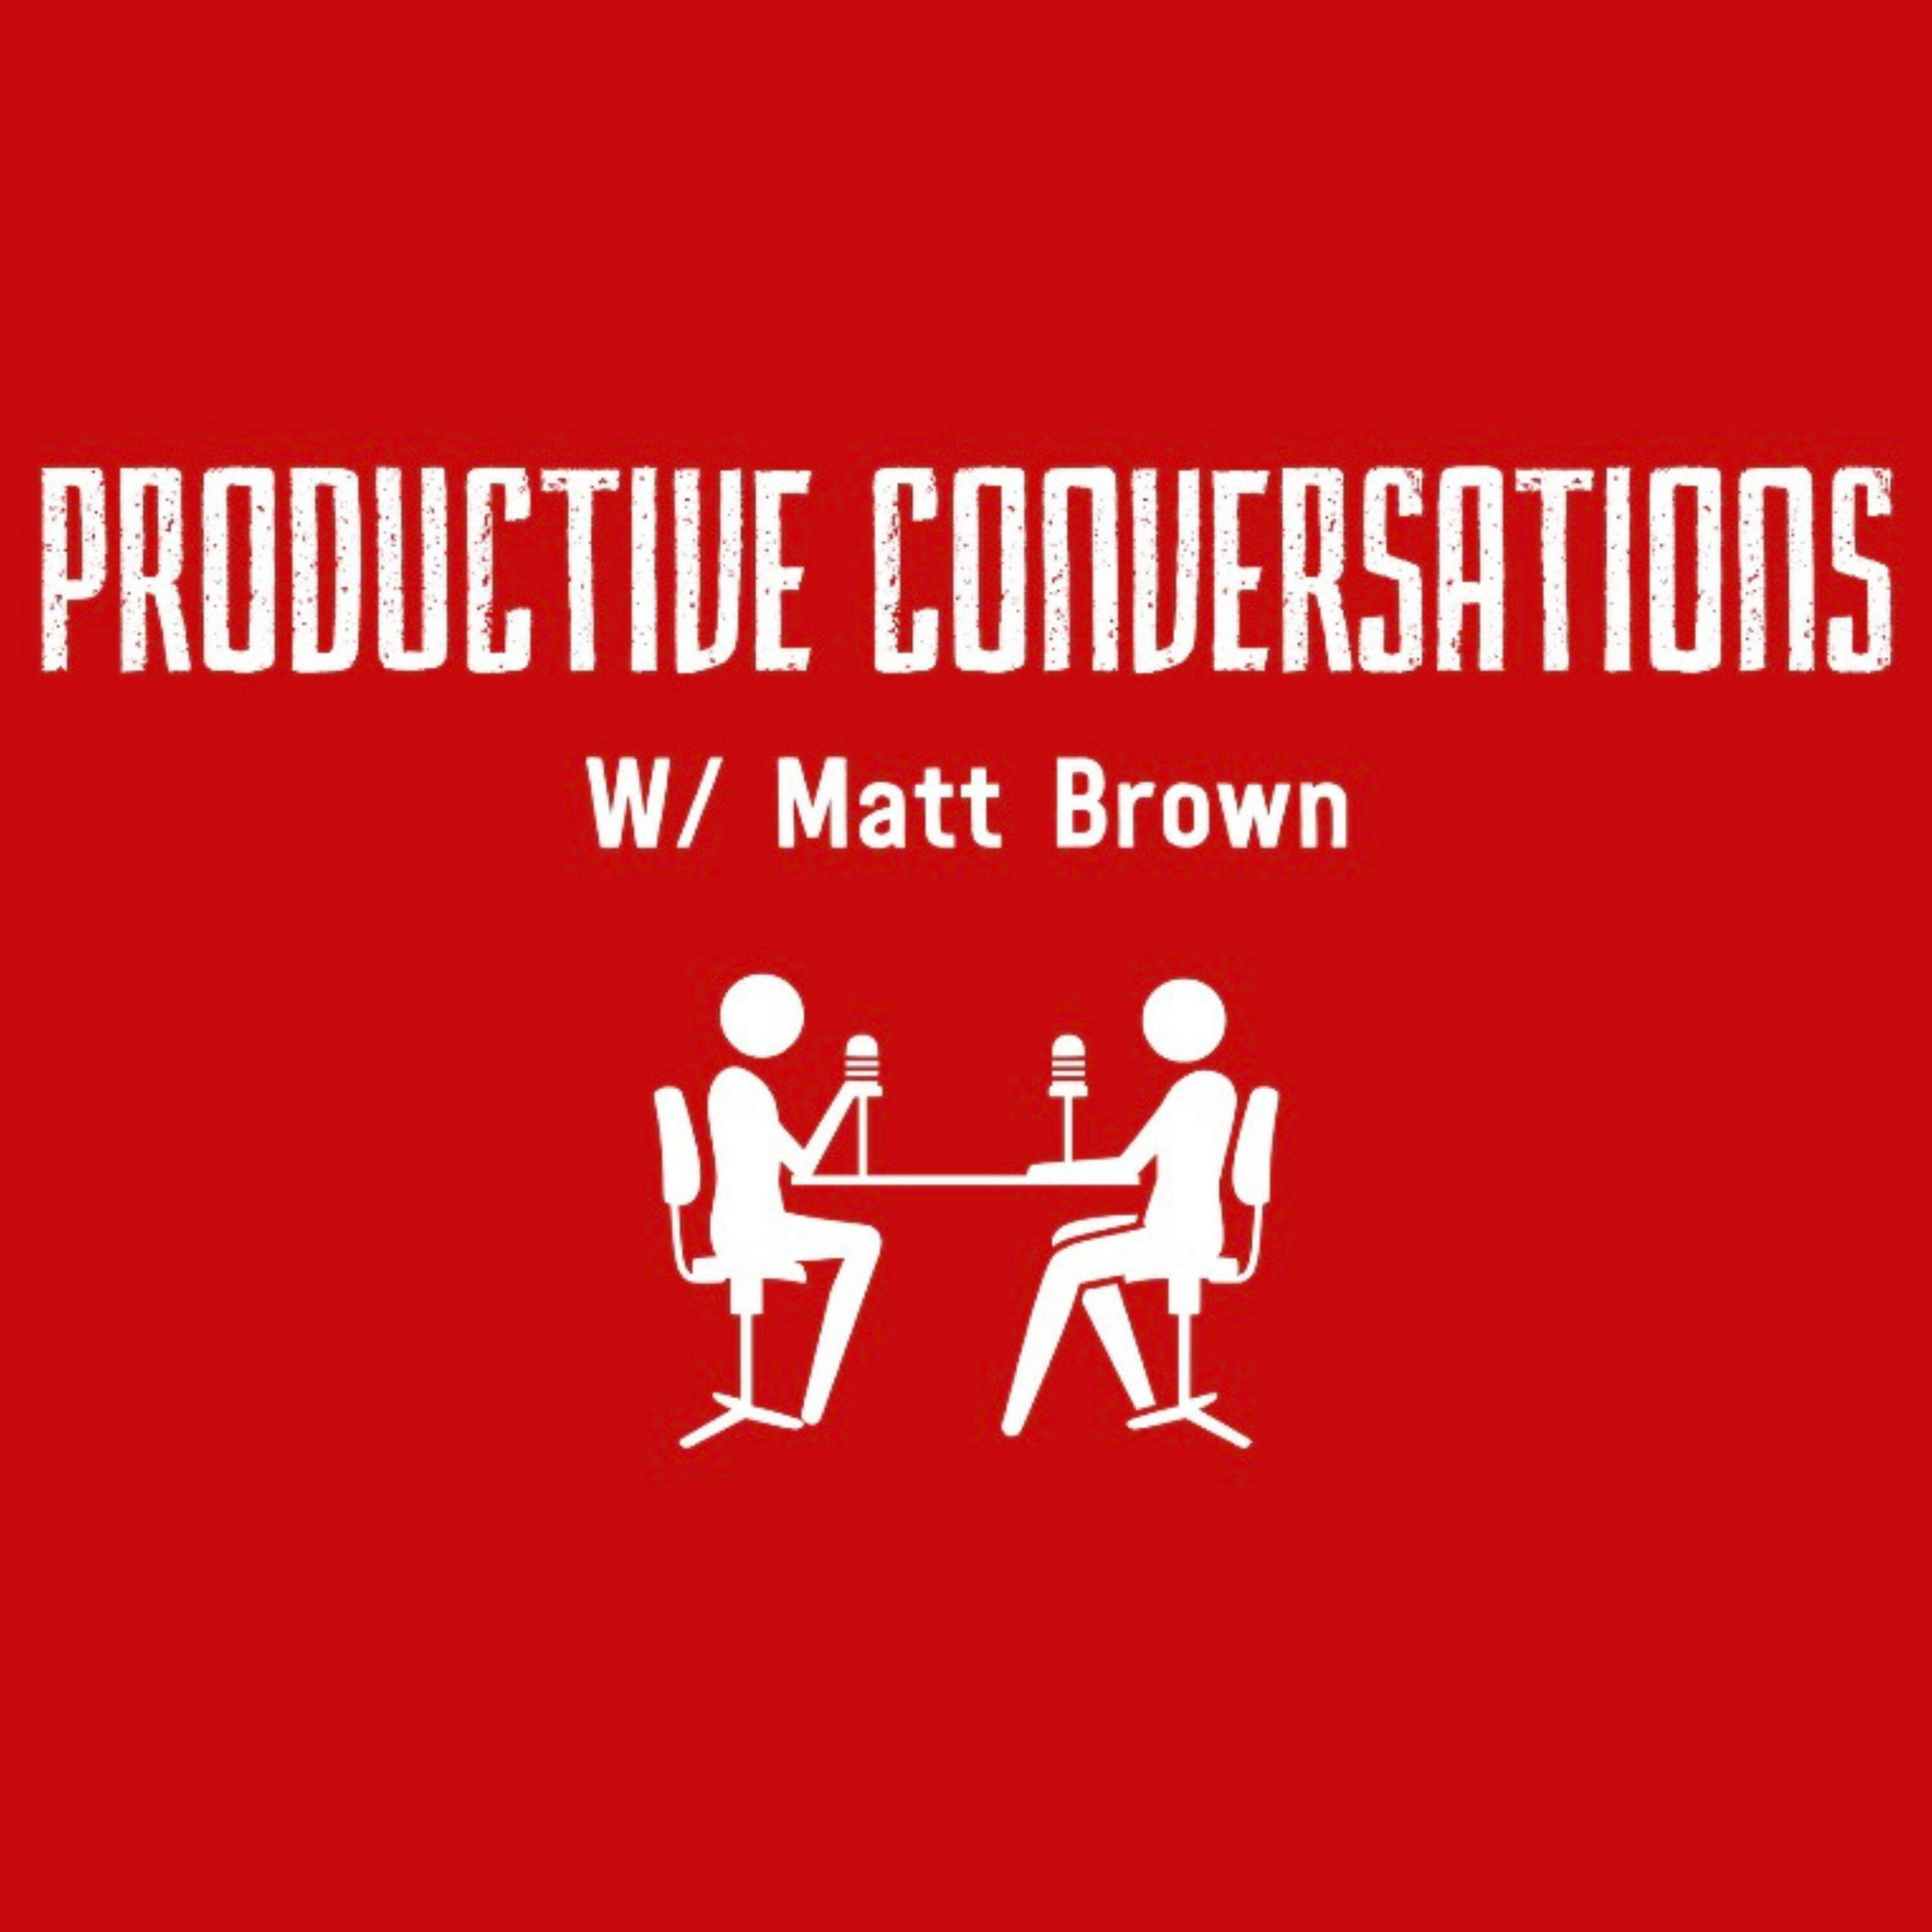 Productive Conversations with Matt Brown